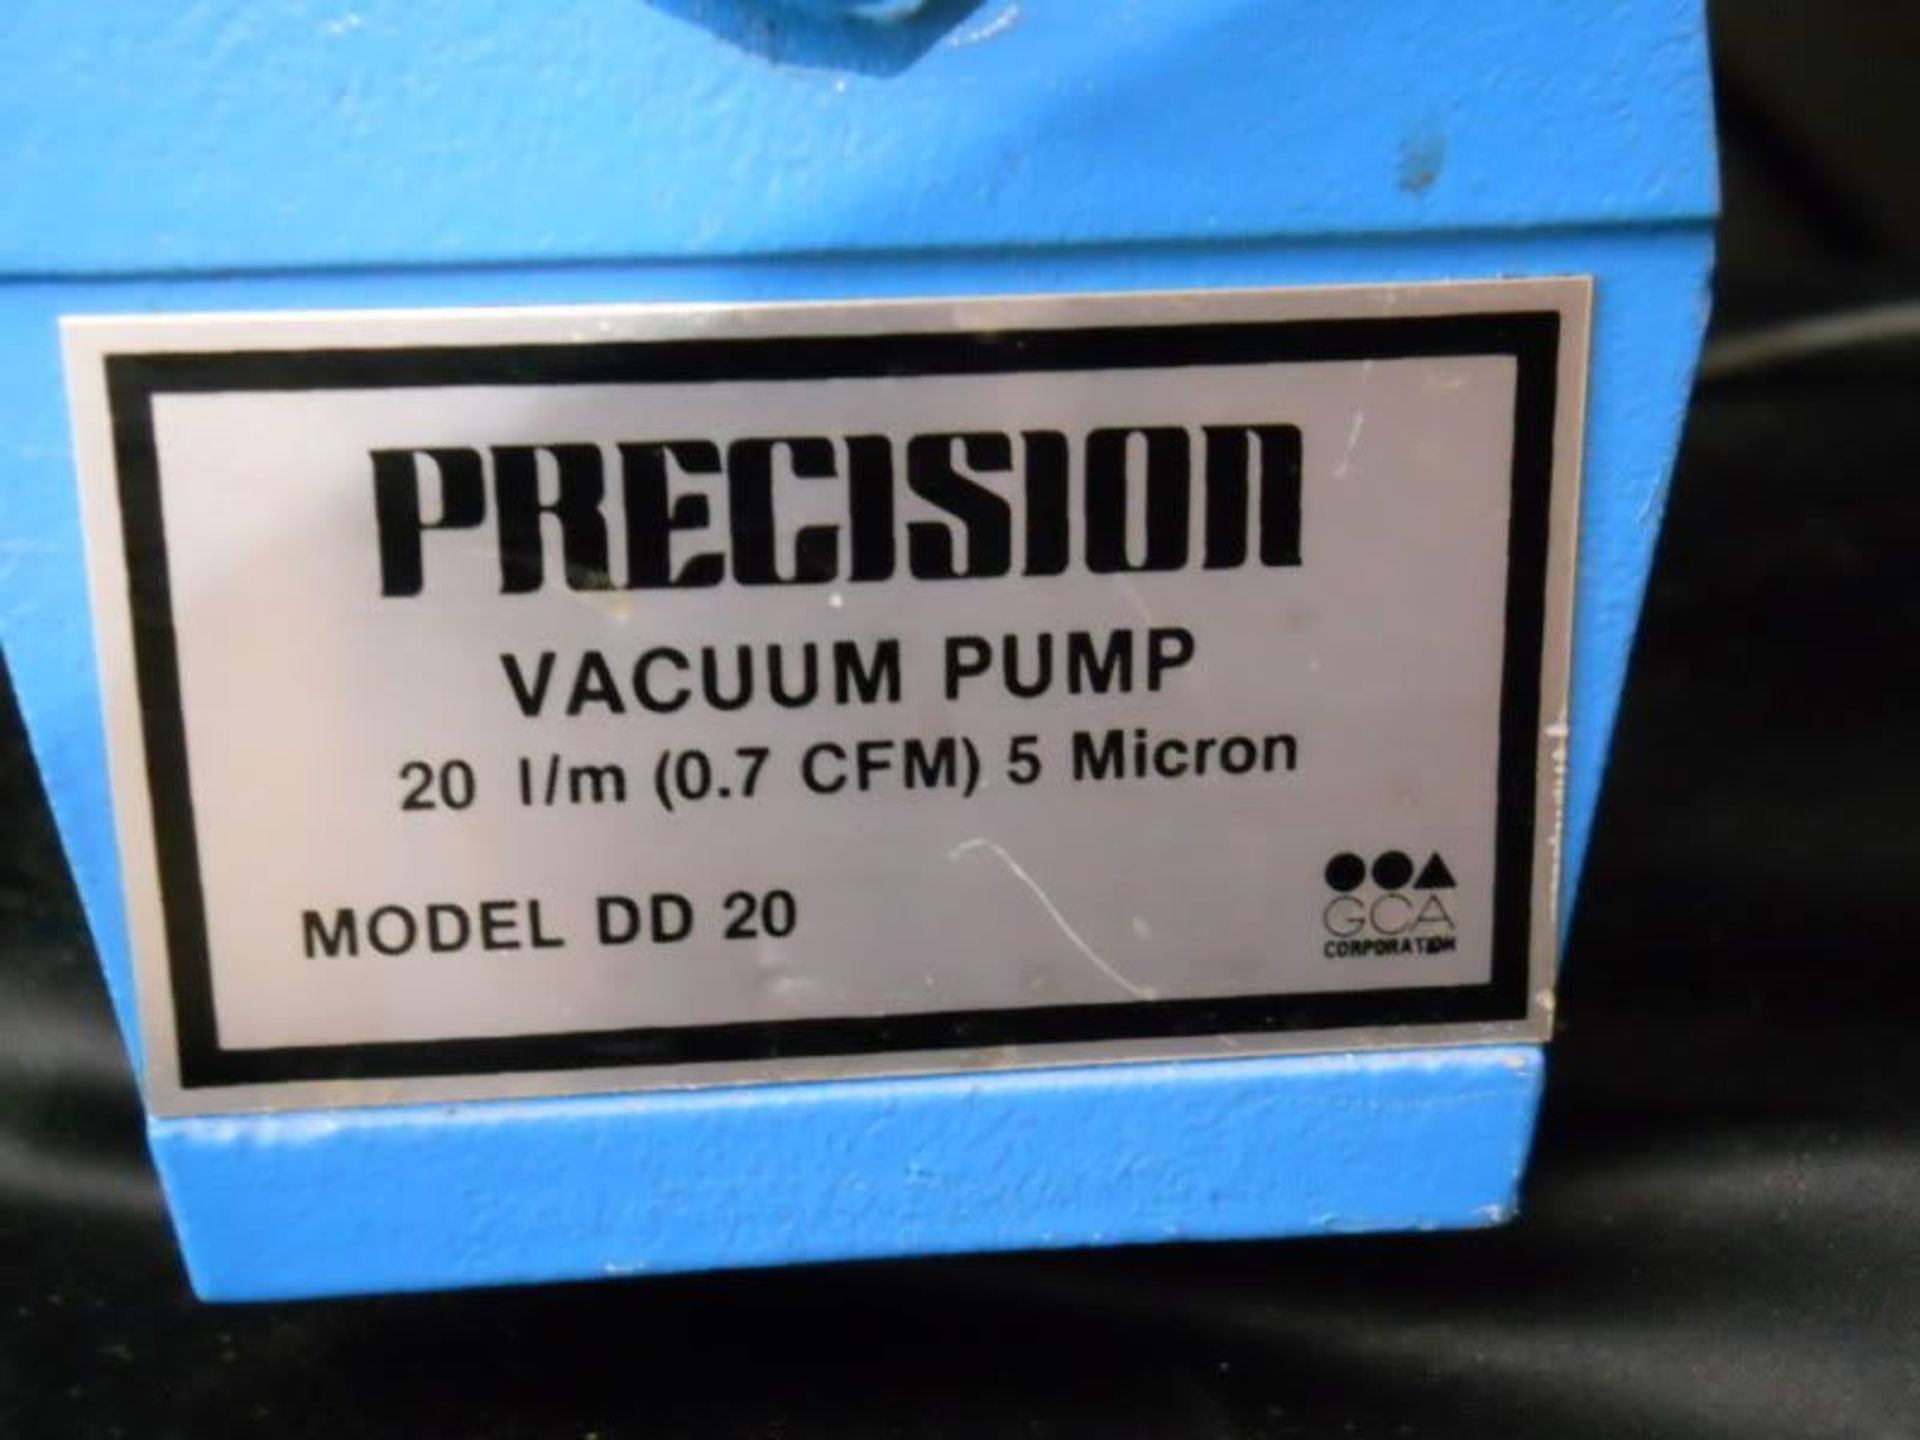 Precision Vacuum Pump Model DD20, Qty 1, 221097481291 - Image 2 of 5